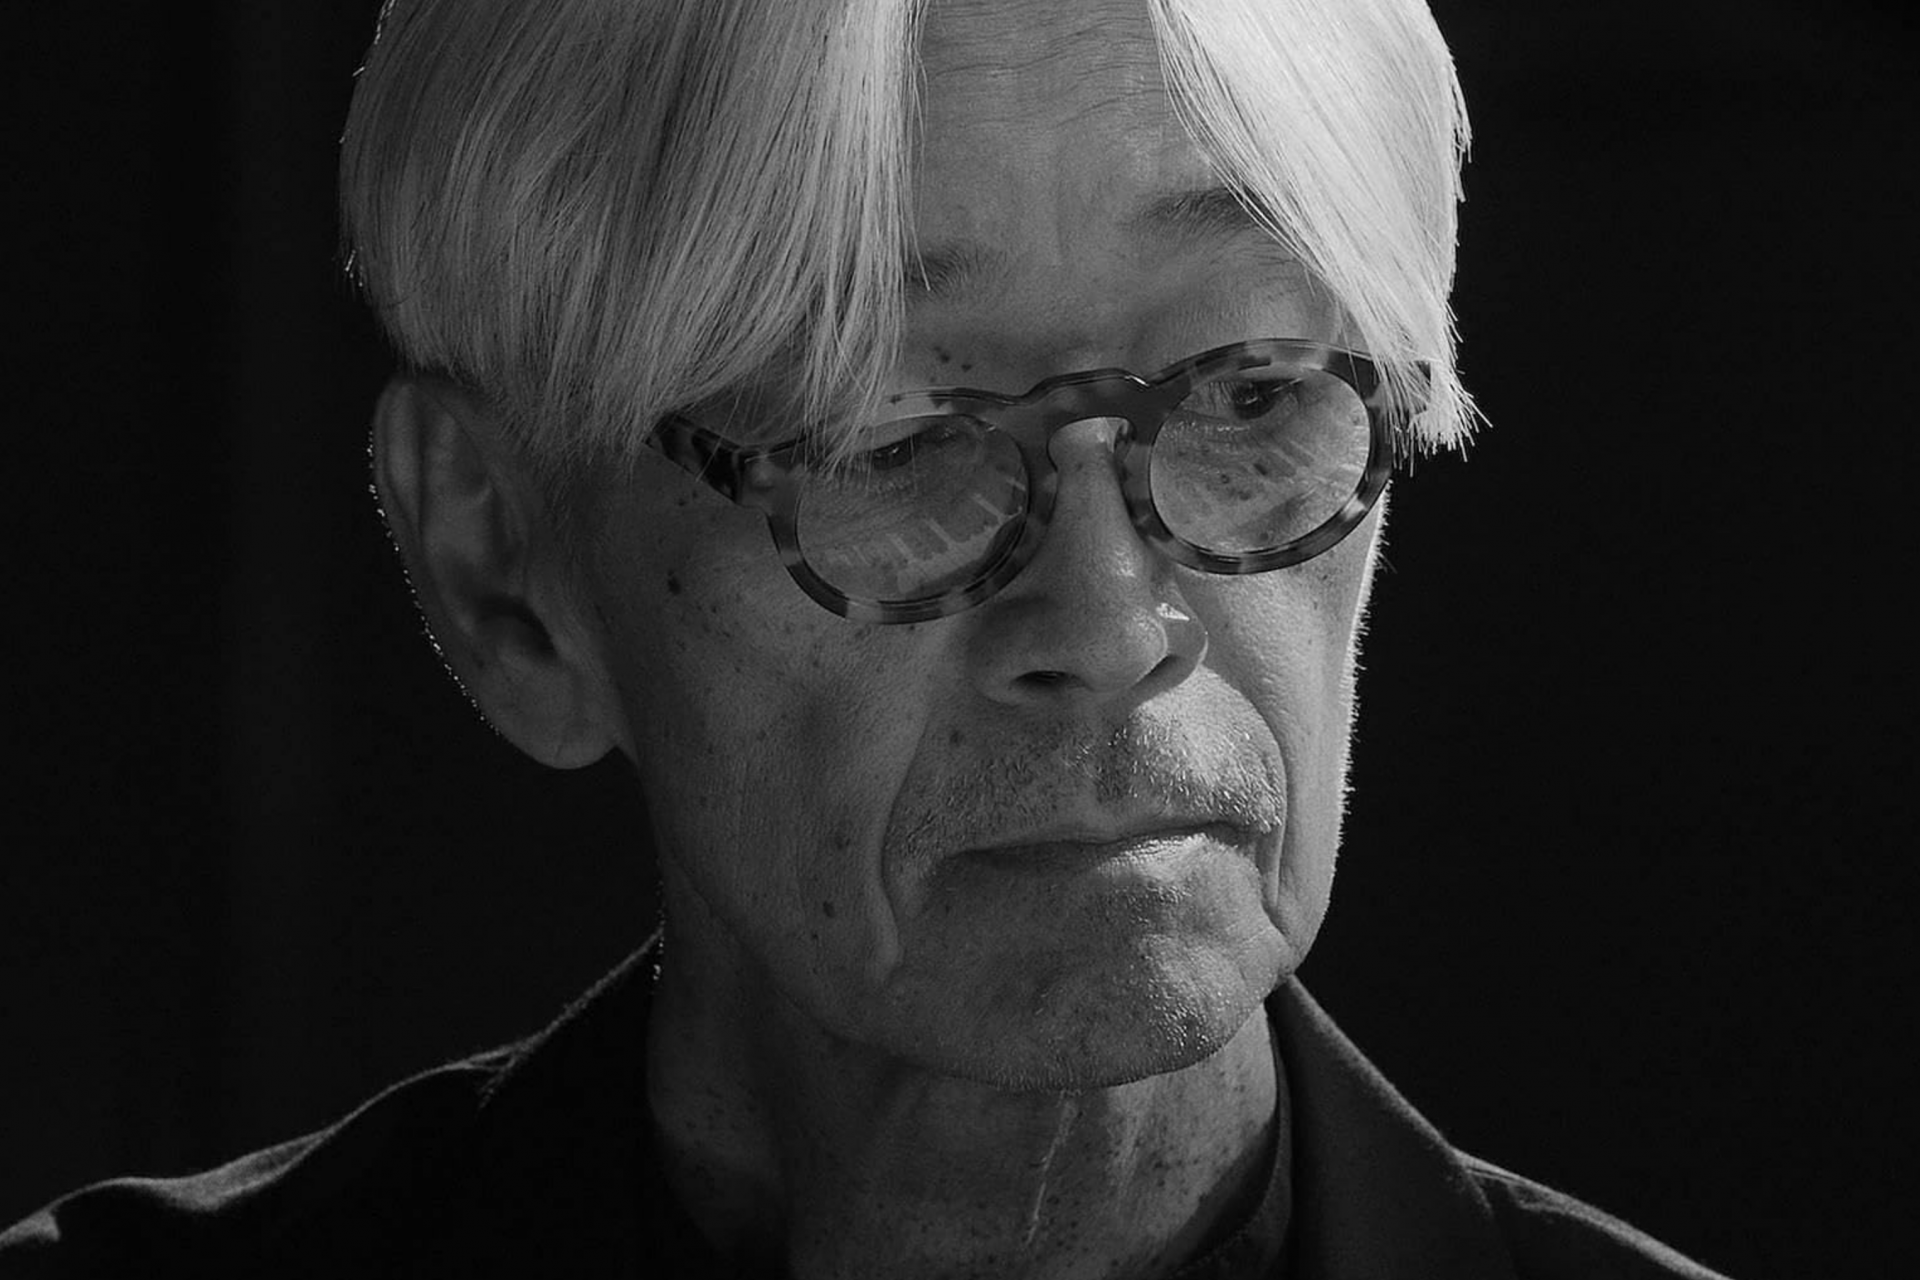 Ryuichi Sakamoto: Opus